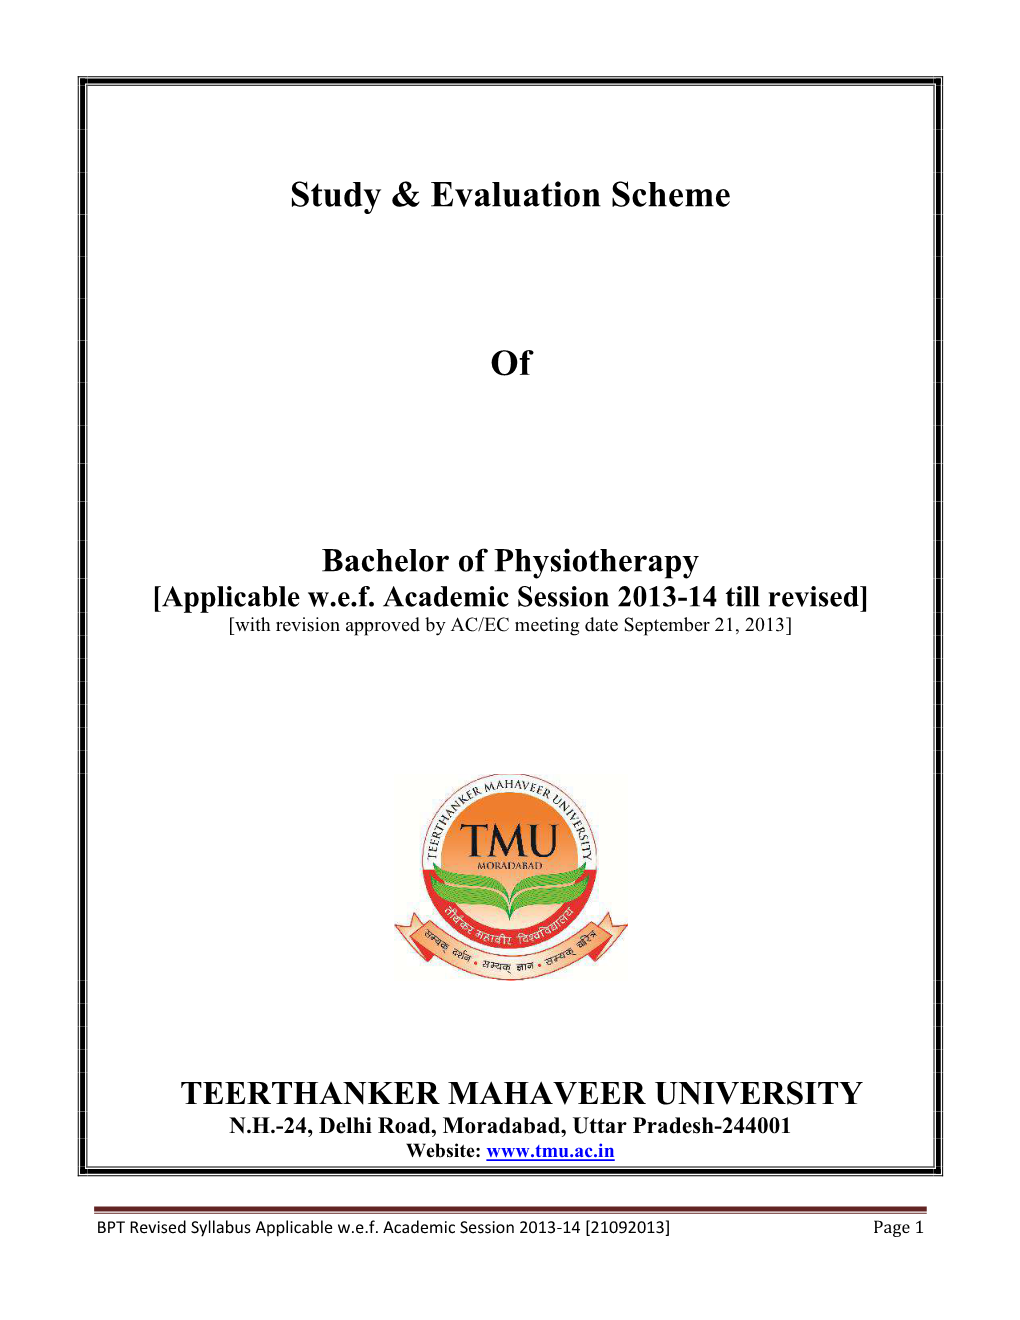 Study & Evaluation Scheme Of